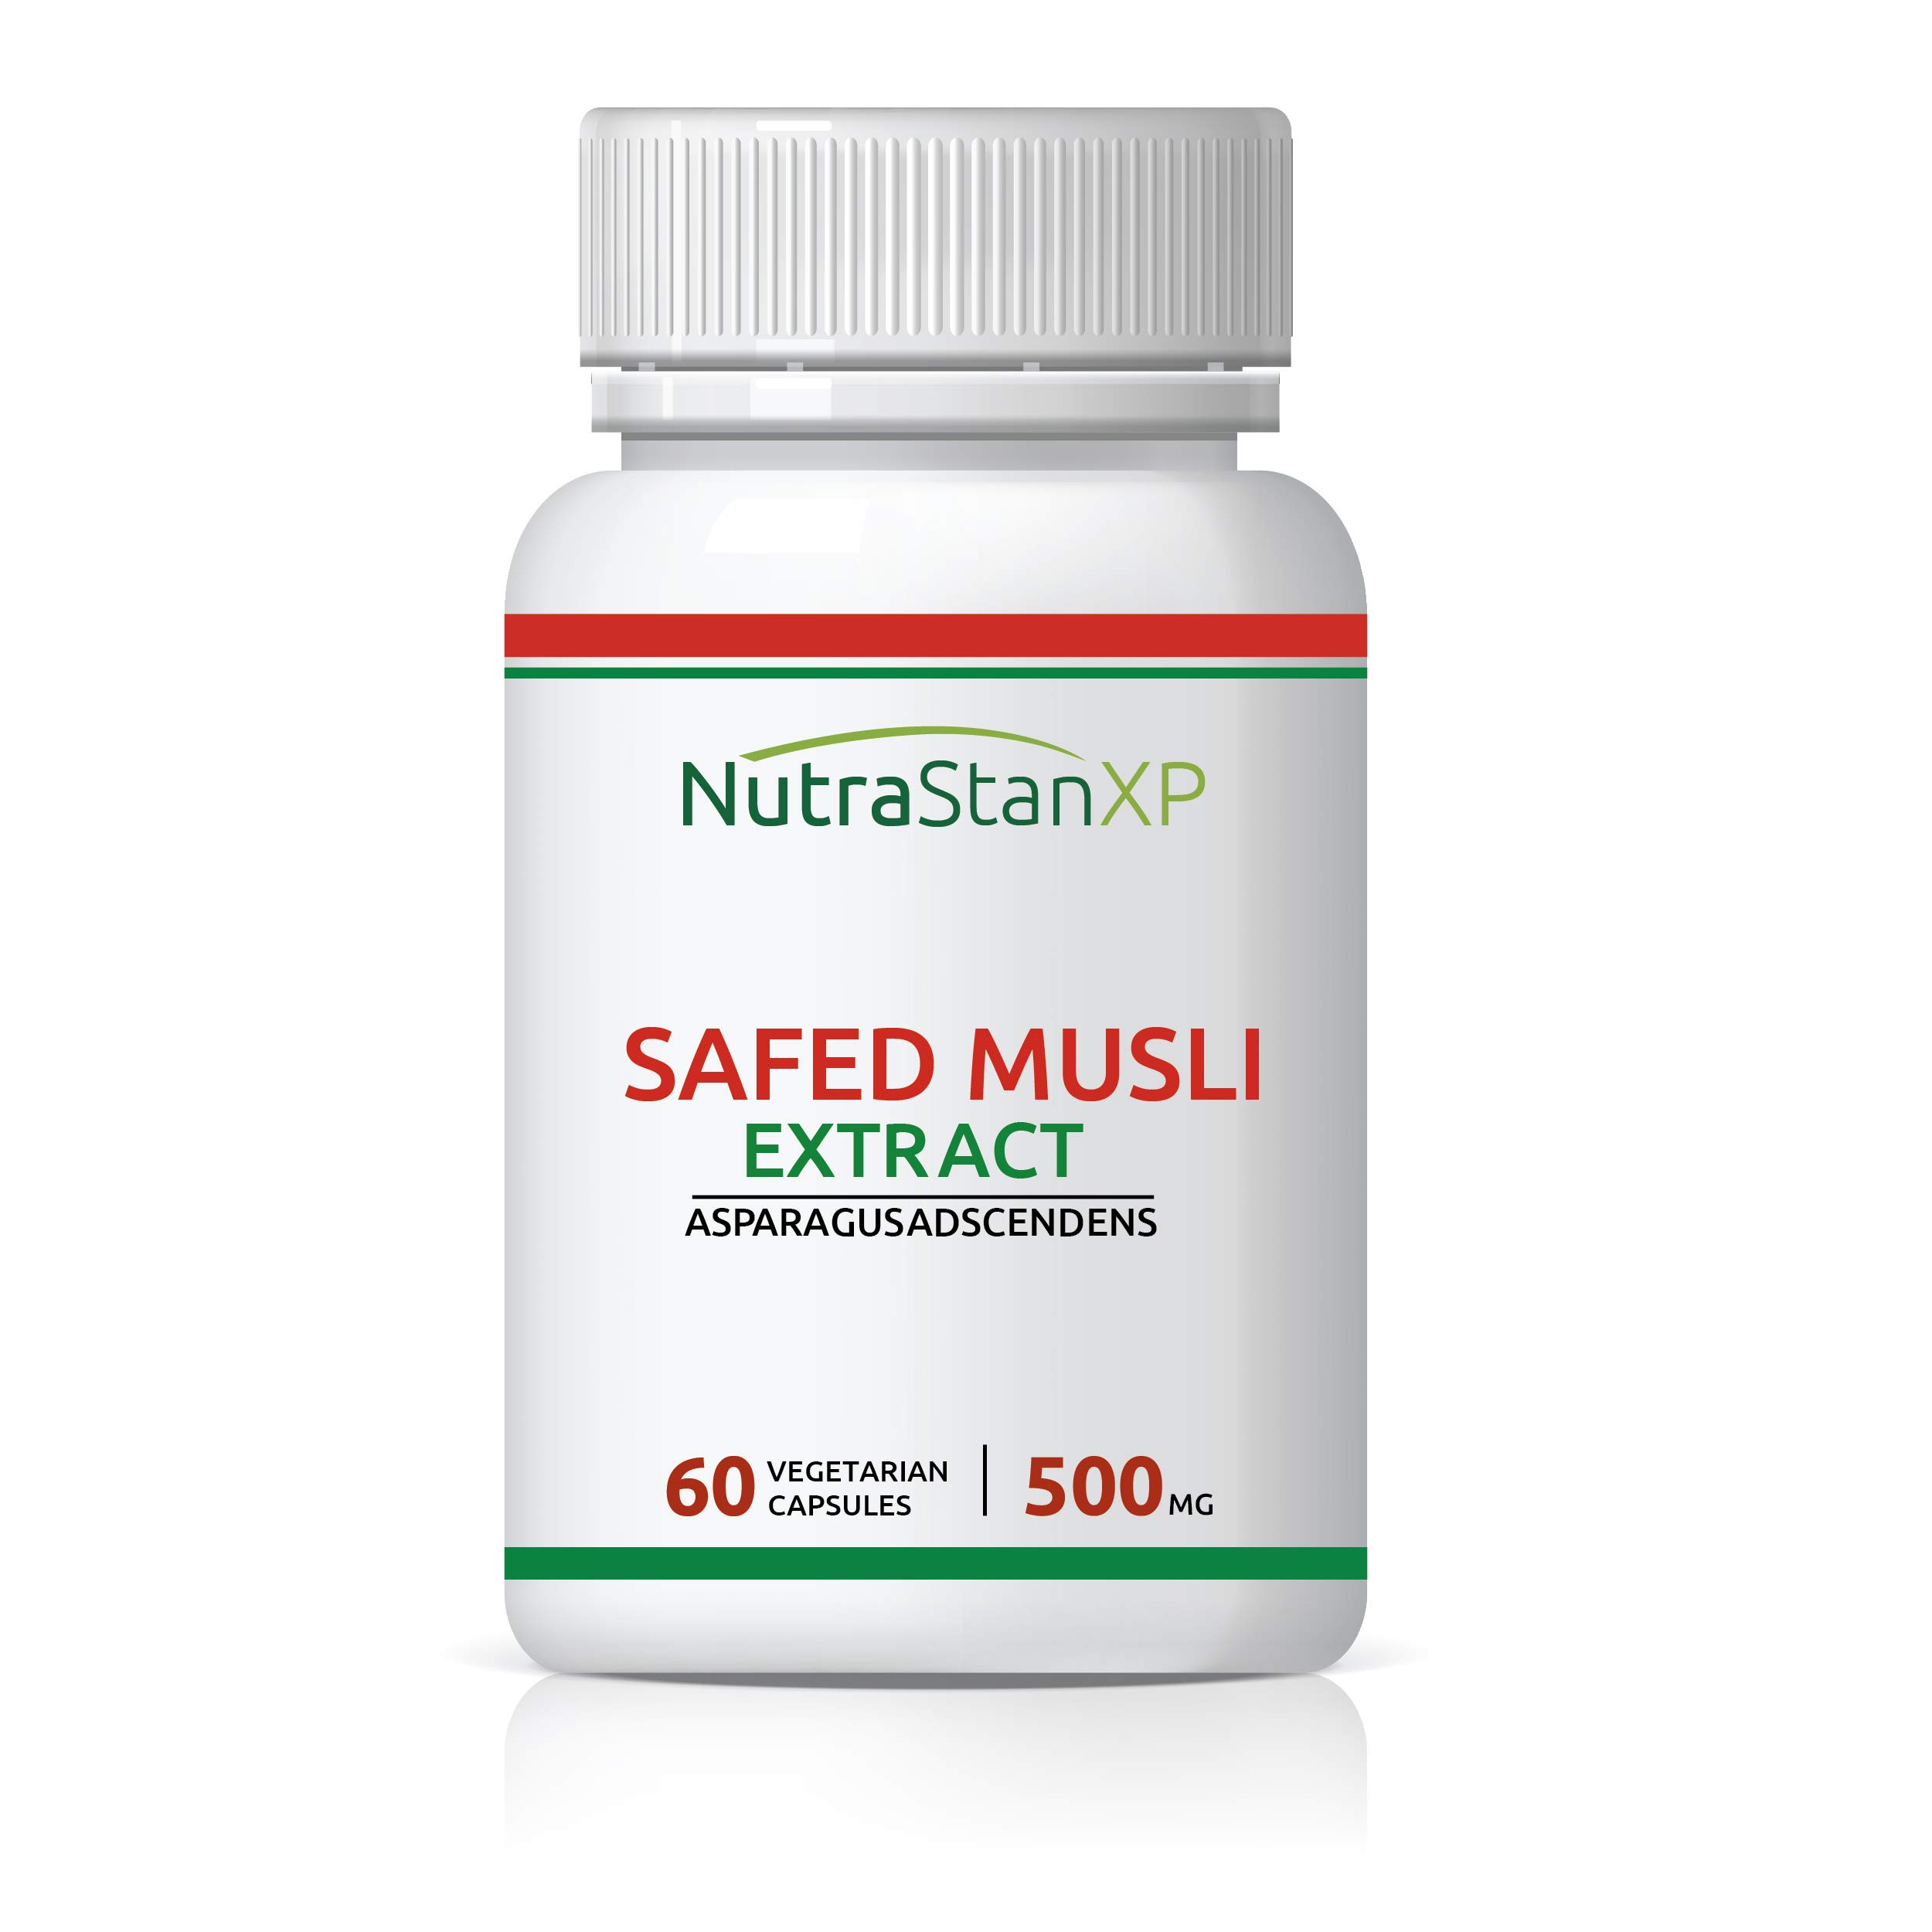 NutrastanXP Safed Musli Extract, 500mg (60 Vegetarian Capsules) (Pack of 1)